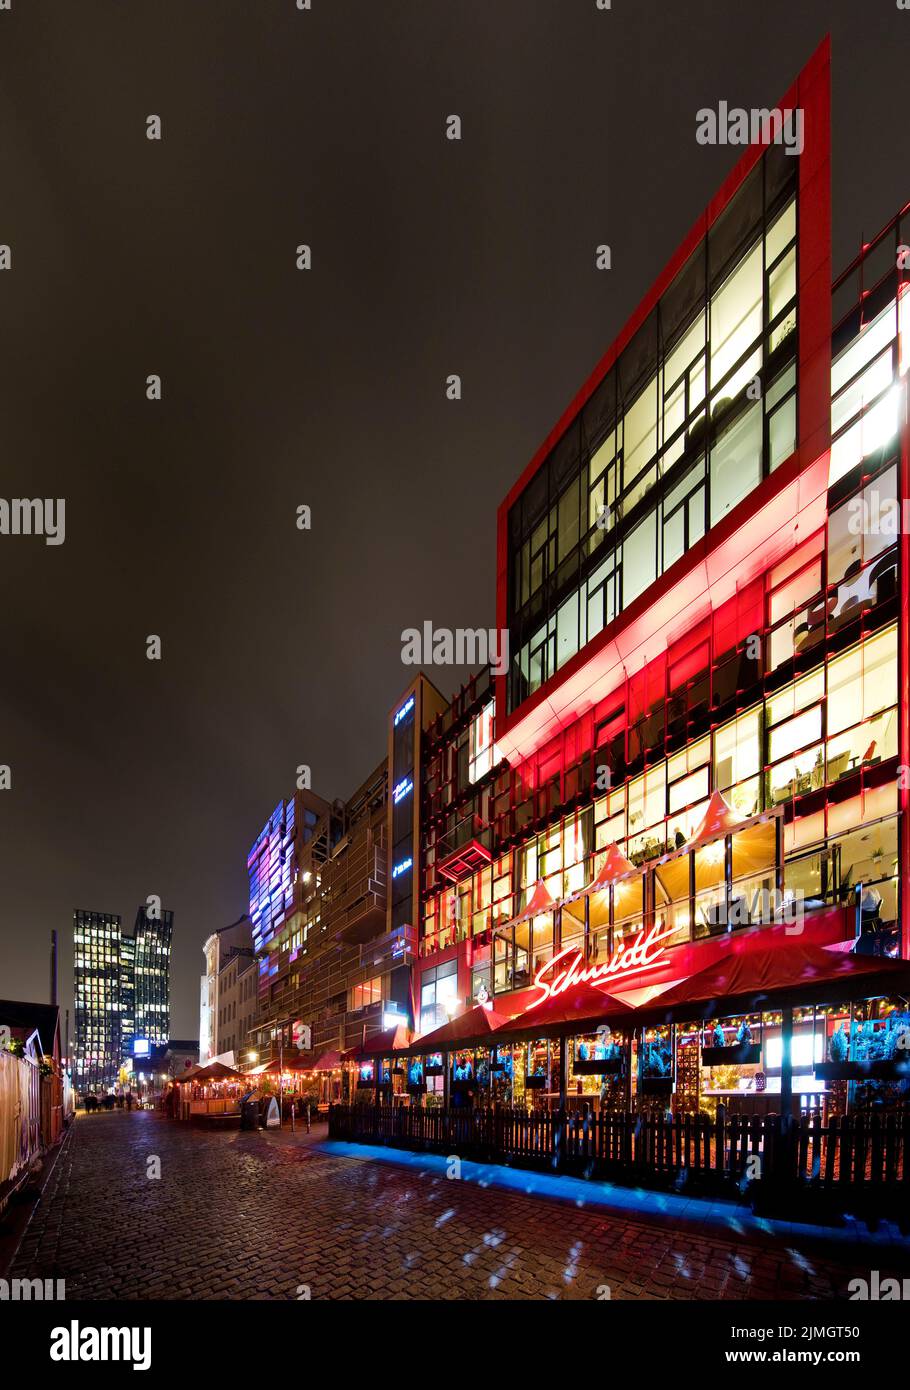 Spielbudenplatz at night with the Schmidt Theater, St. Pauli, Hamburg, Germany, Europe Stock Photo